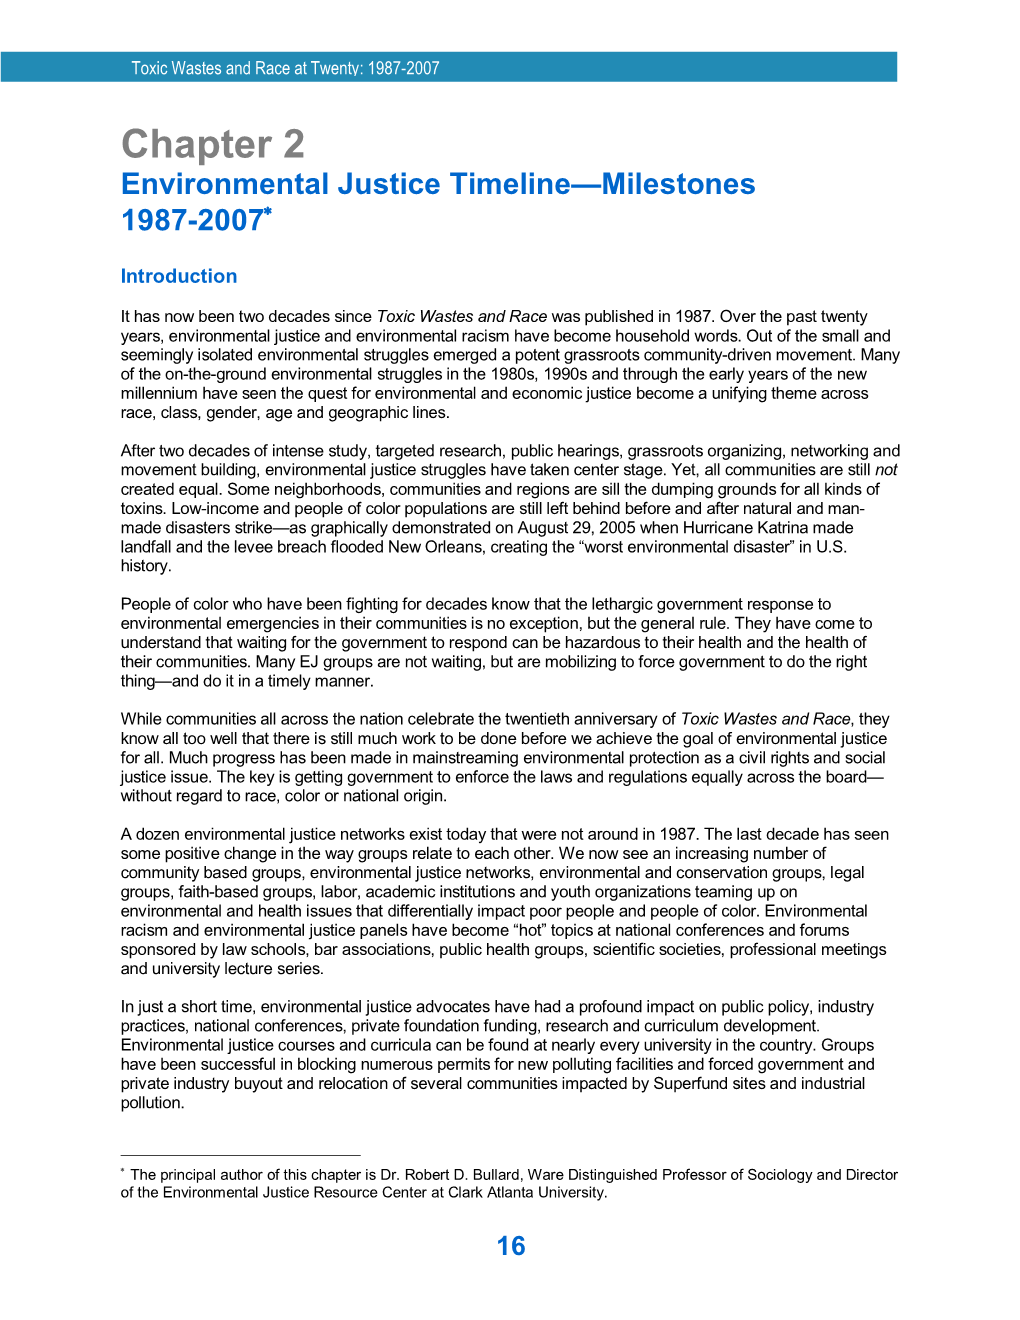 Chapter 2: Environmental Justice Timeline/Milestones 1987-2007